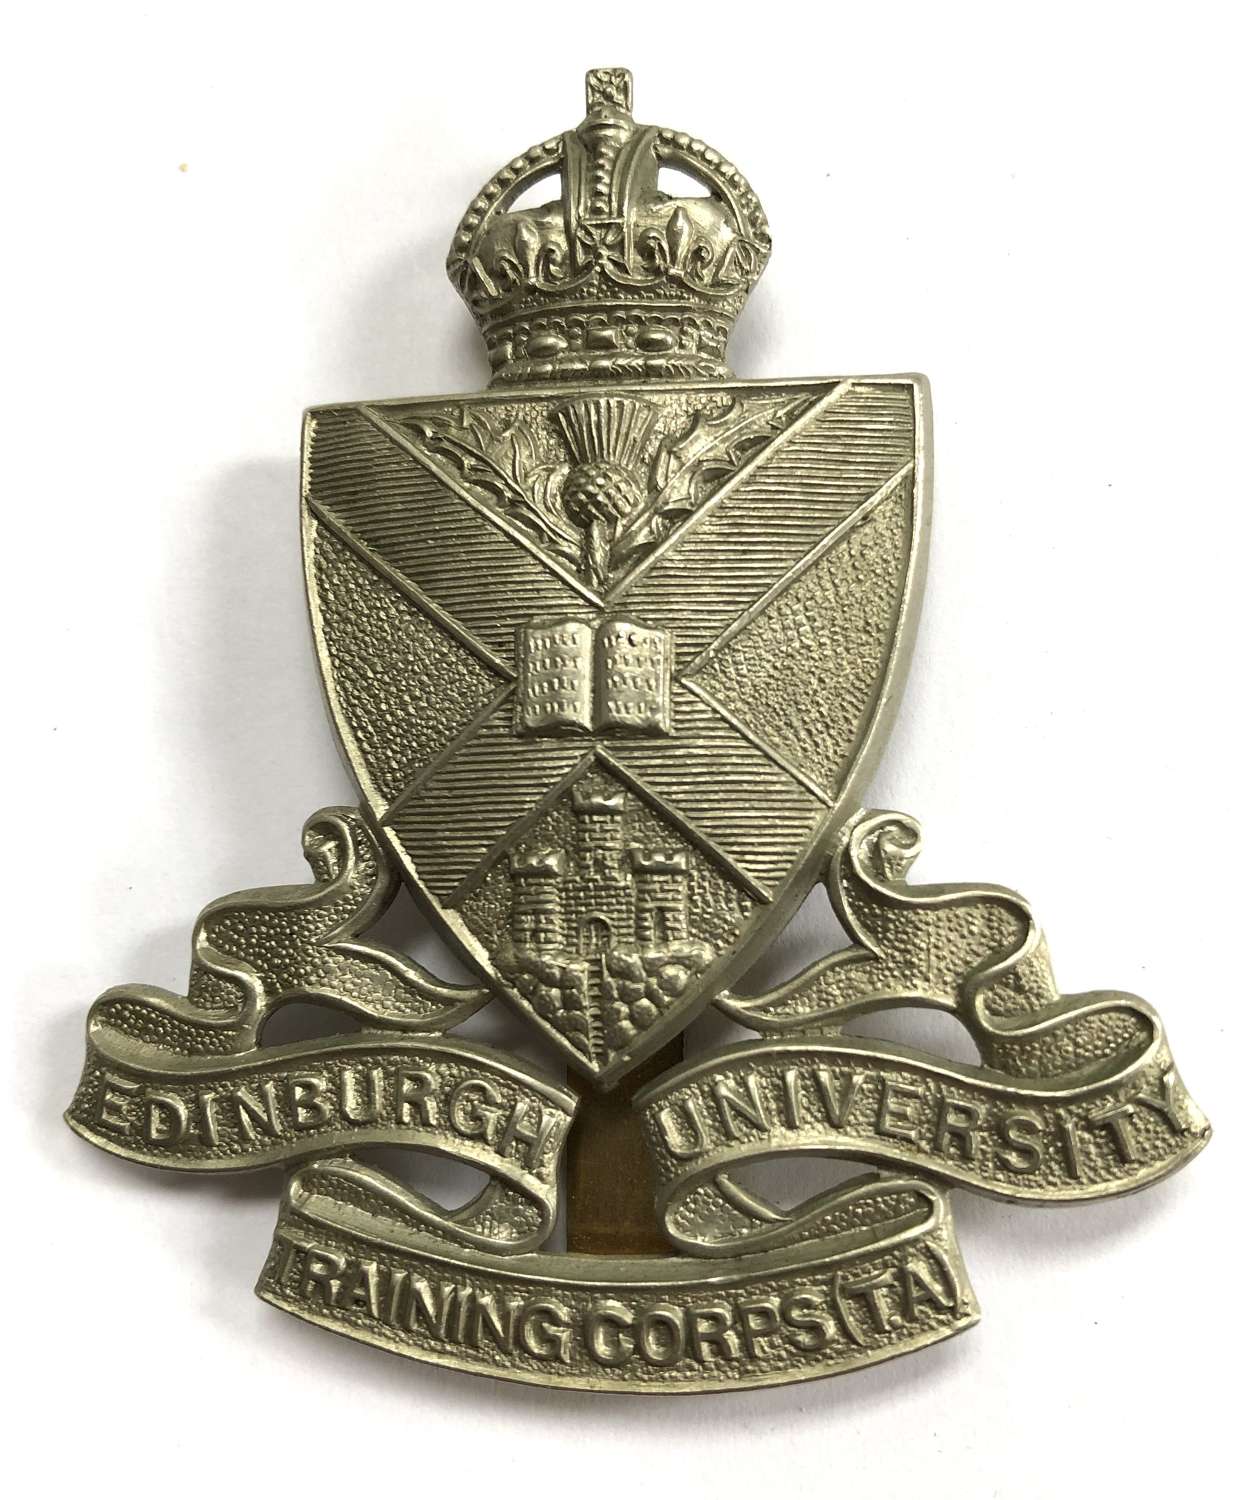 Edinburgh University Training Corps (TA) cap / glengarry badge